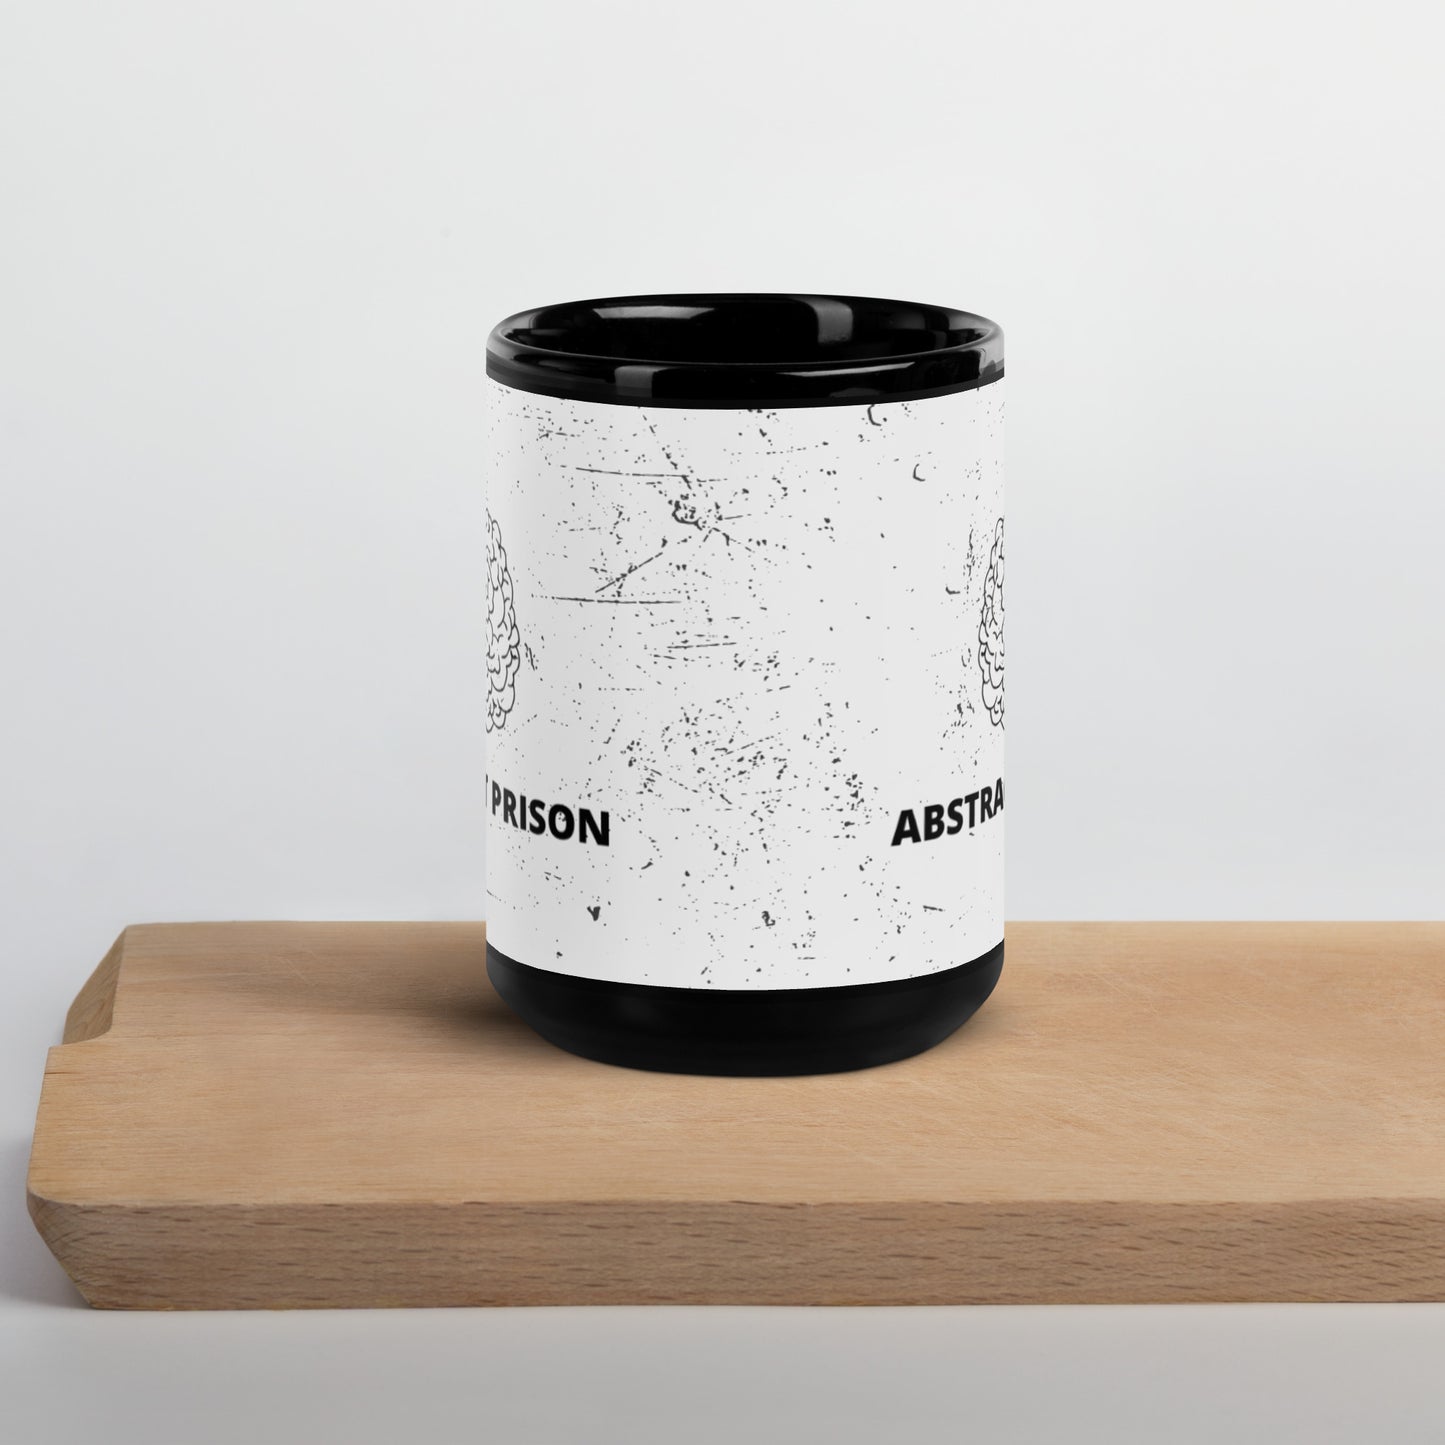 Abstract Prison - Black Glossy Mug